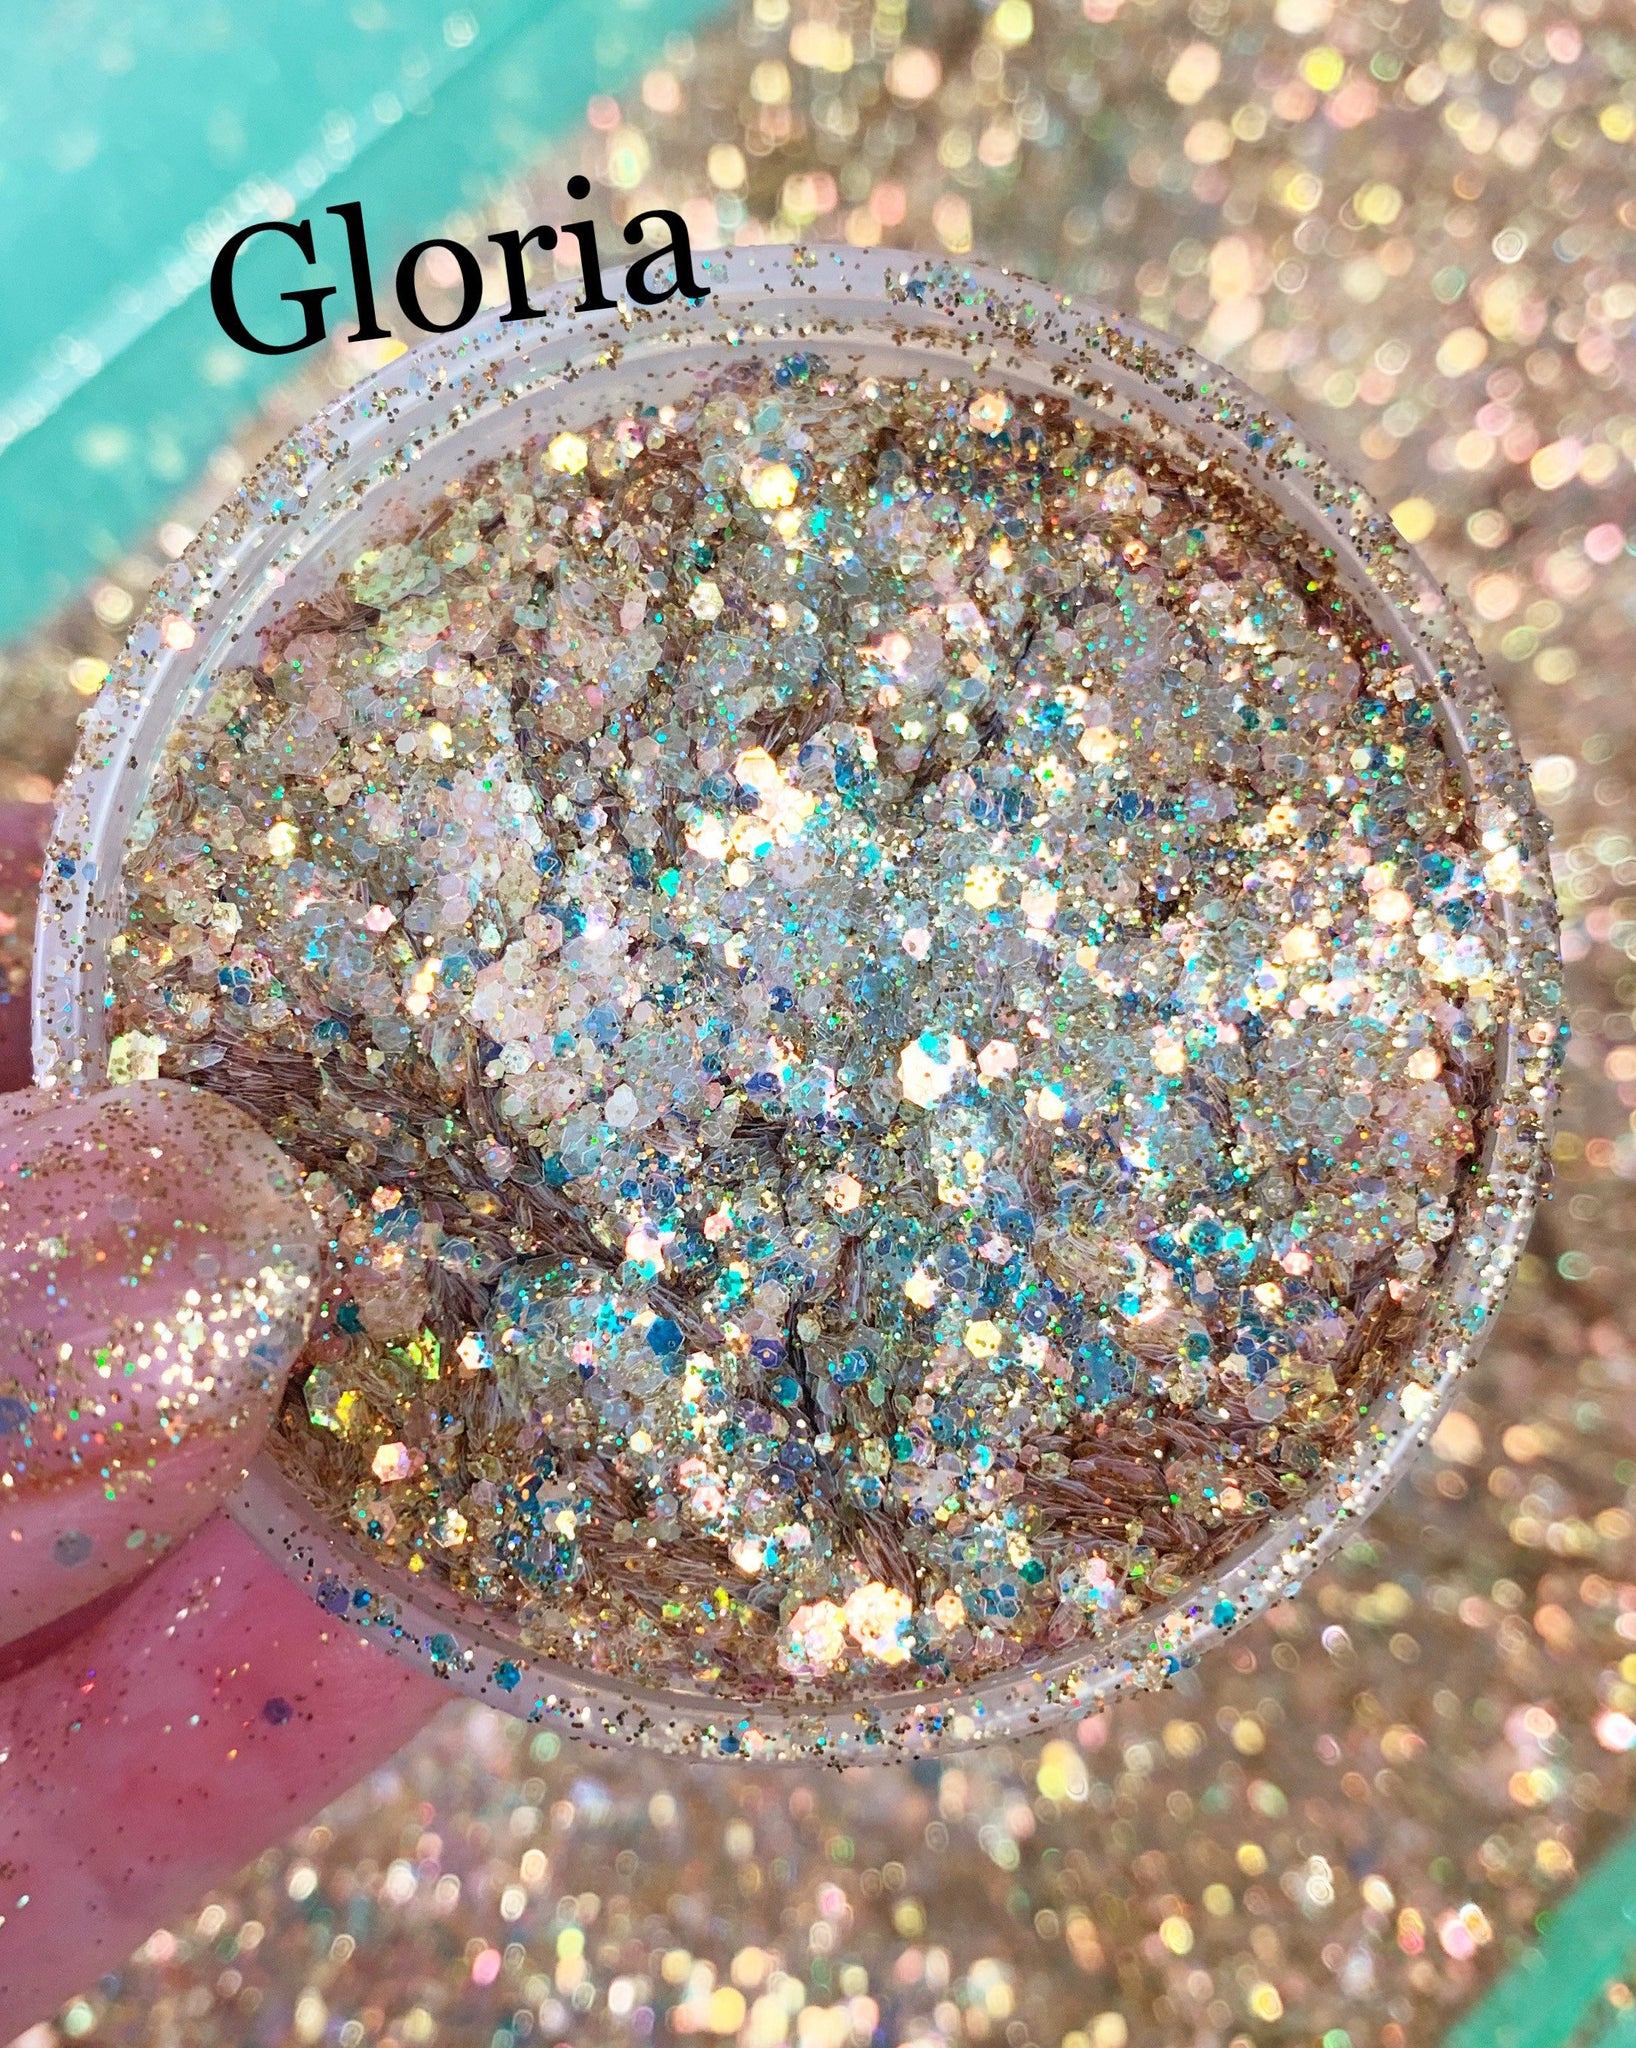 HTVRONT Holographic Chunky Glitter, 100g Iridescent Glitter Mixed